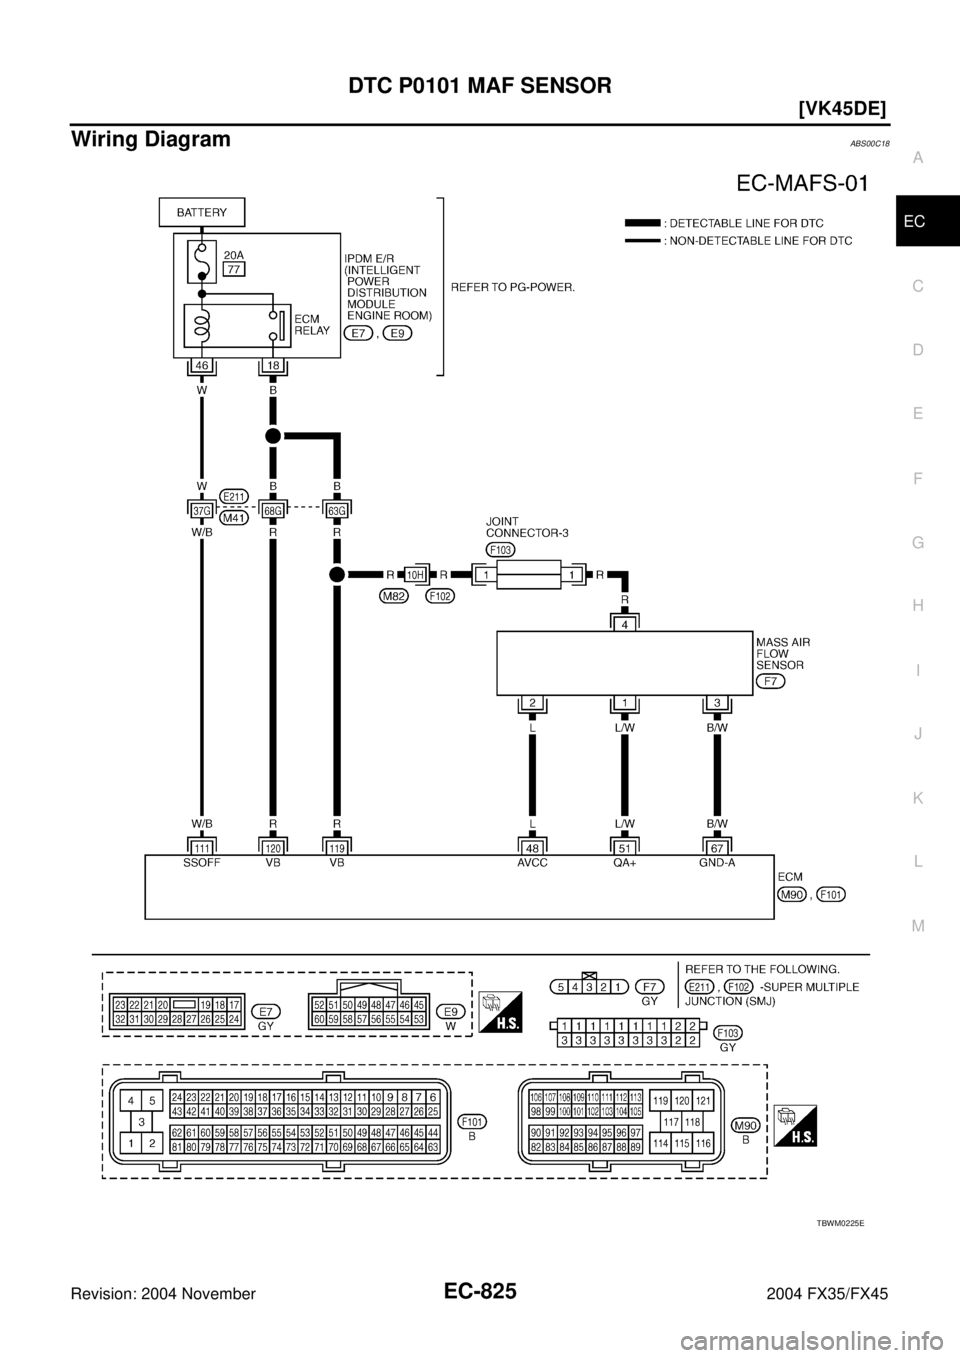 INFINITI FX35 2004  Service Manual DTC P0101 MAF SENSOR
EC-825
[VK45DE]
C
D
E
F
G
H
I
J
K
L
MA
EC
Revision: 2004 November 2004 FX35/FX45
Wiring DiagramABS00C18
TBWM0225E 